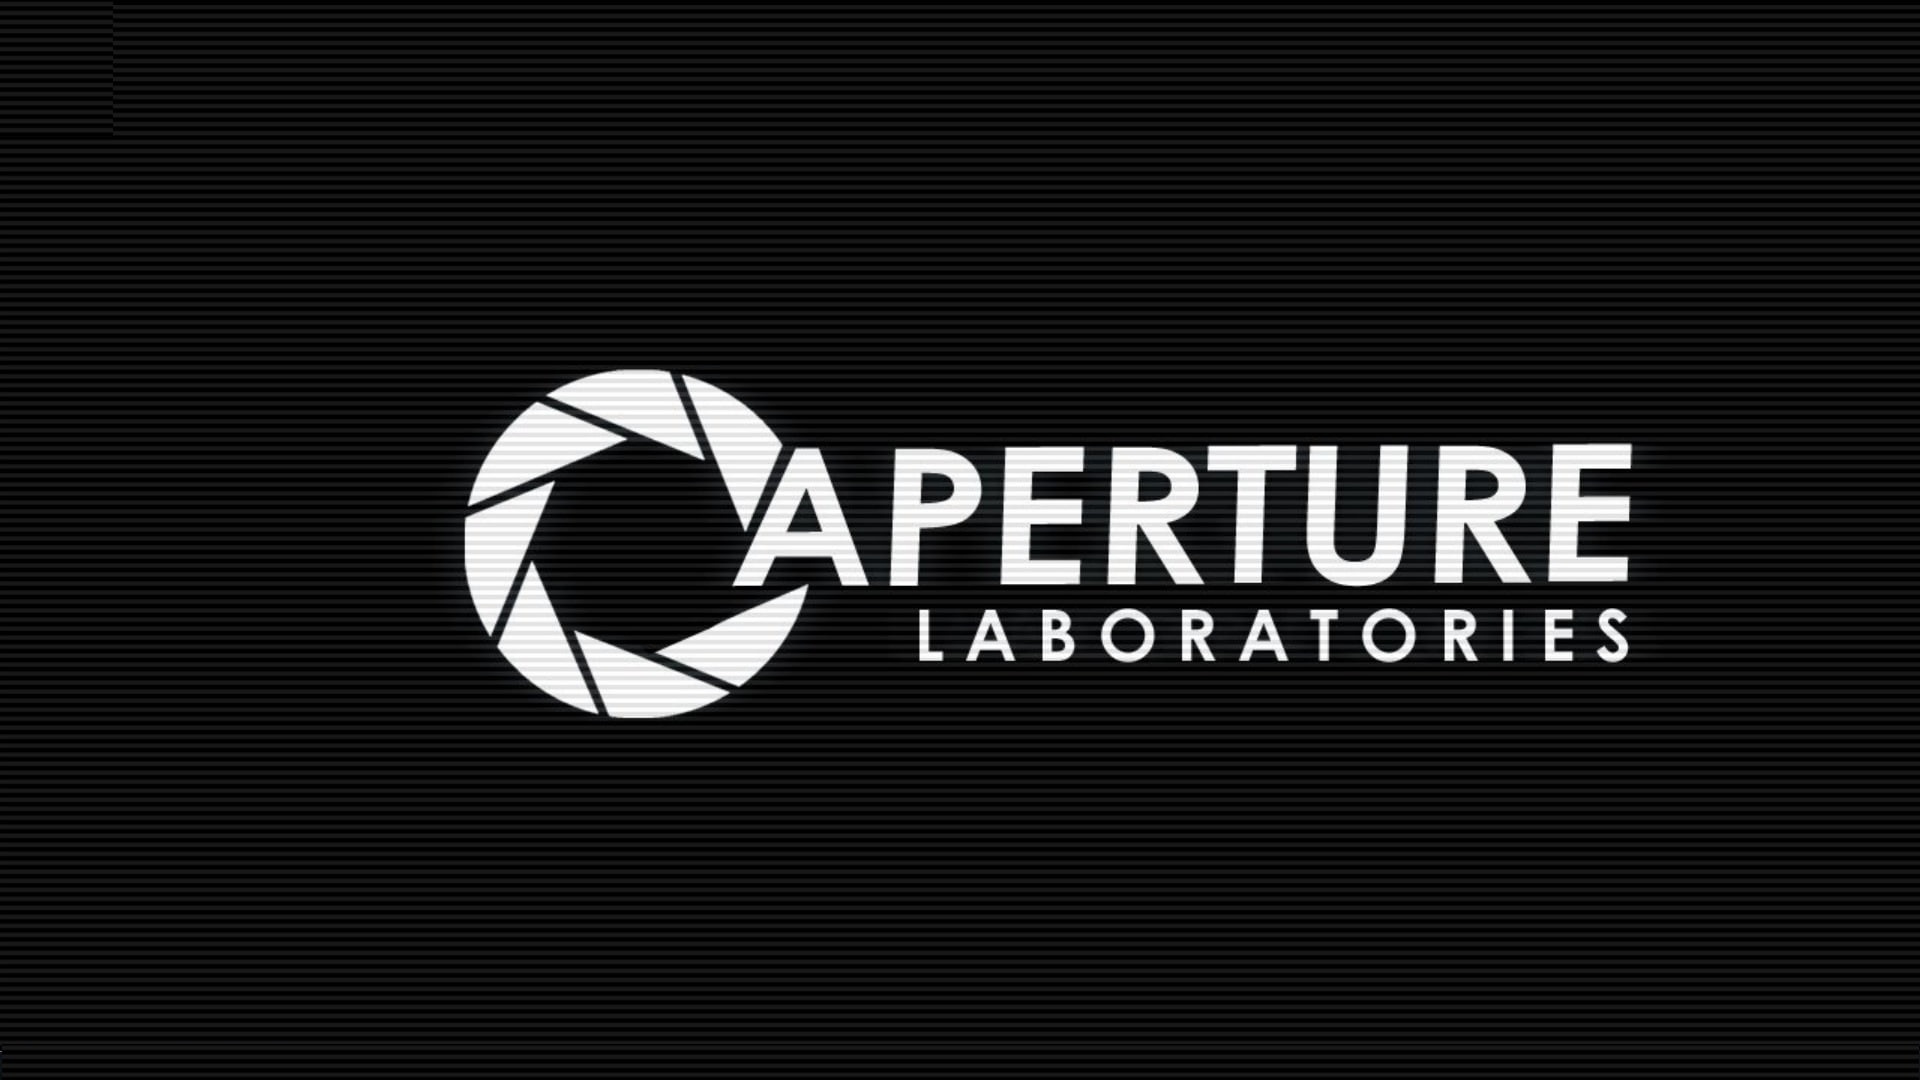 Portal Aperture Black HD, aperture laboratories logo, video games